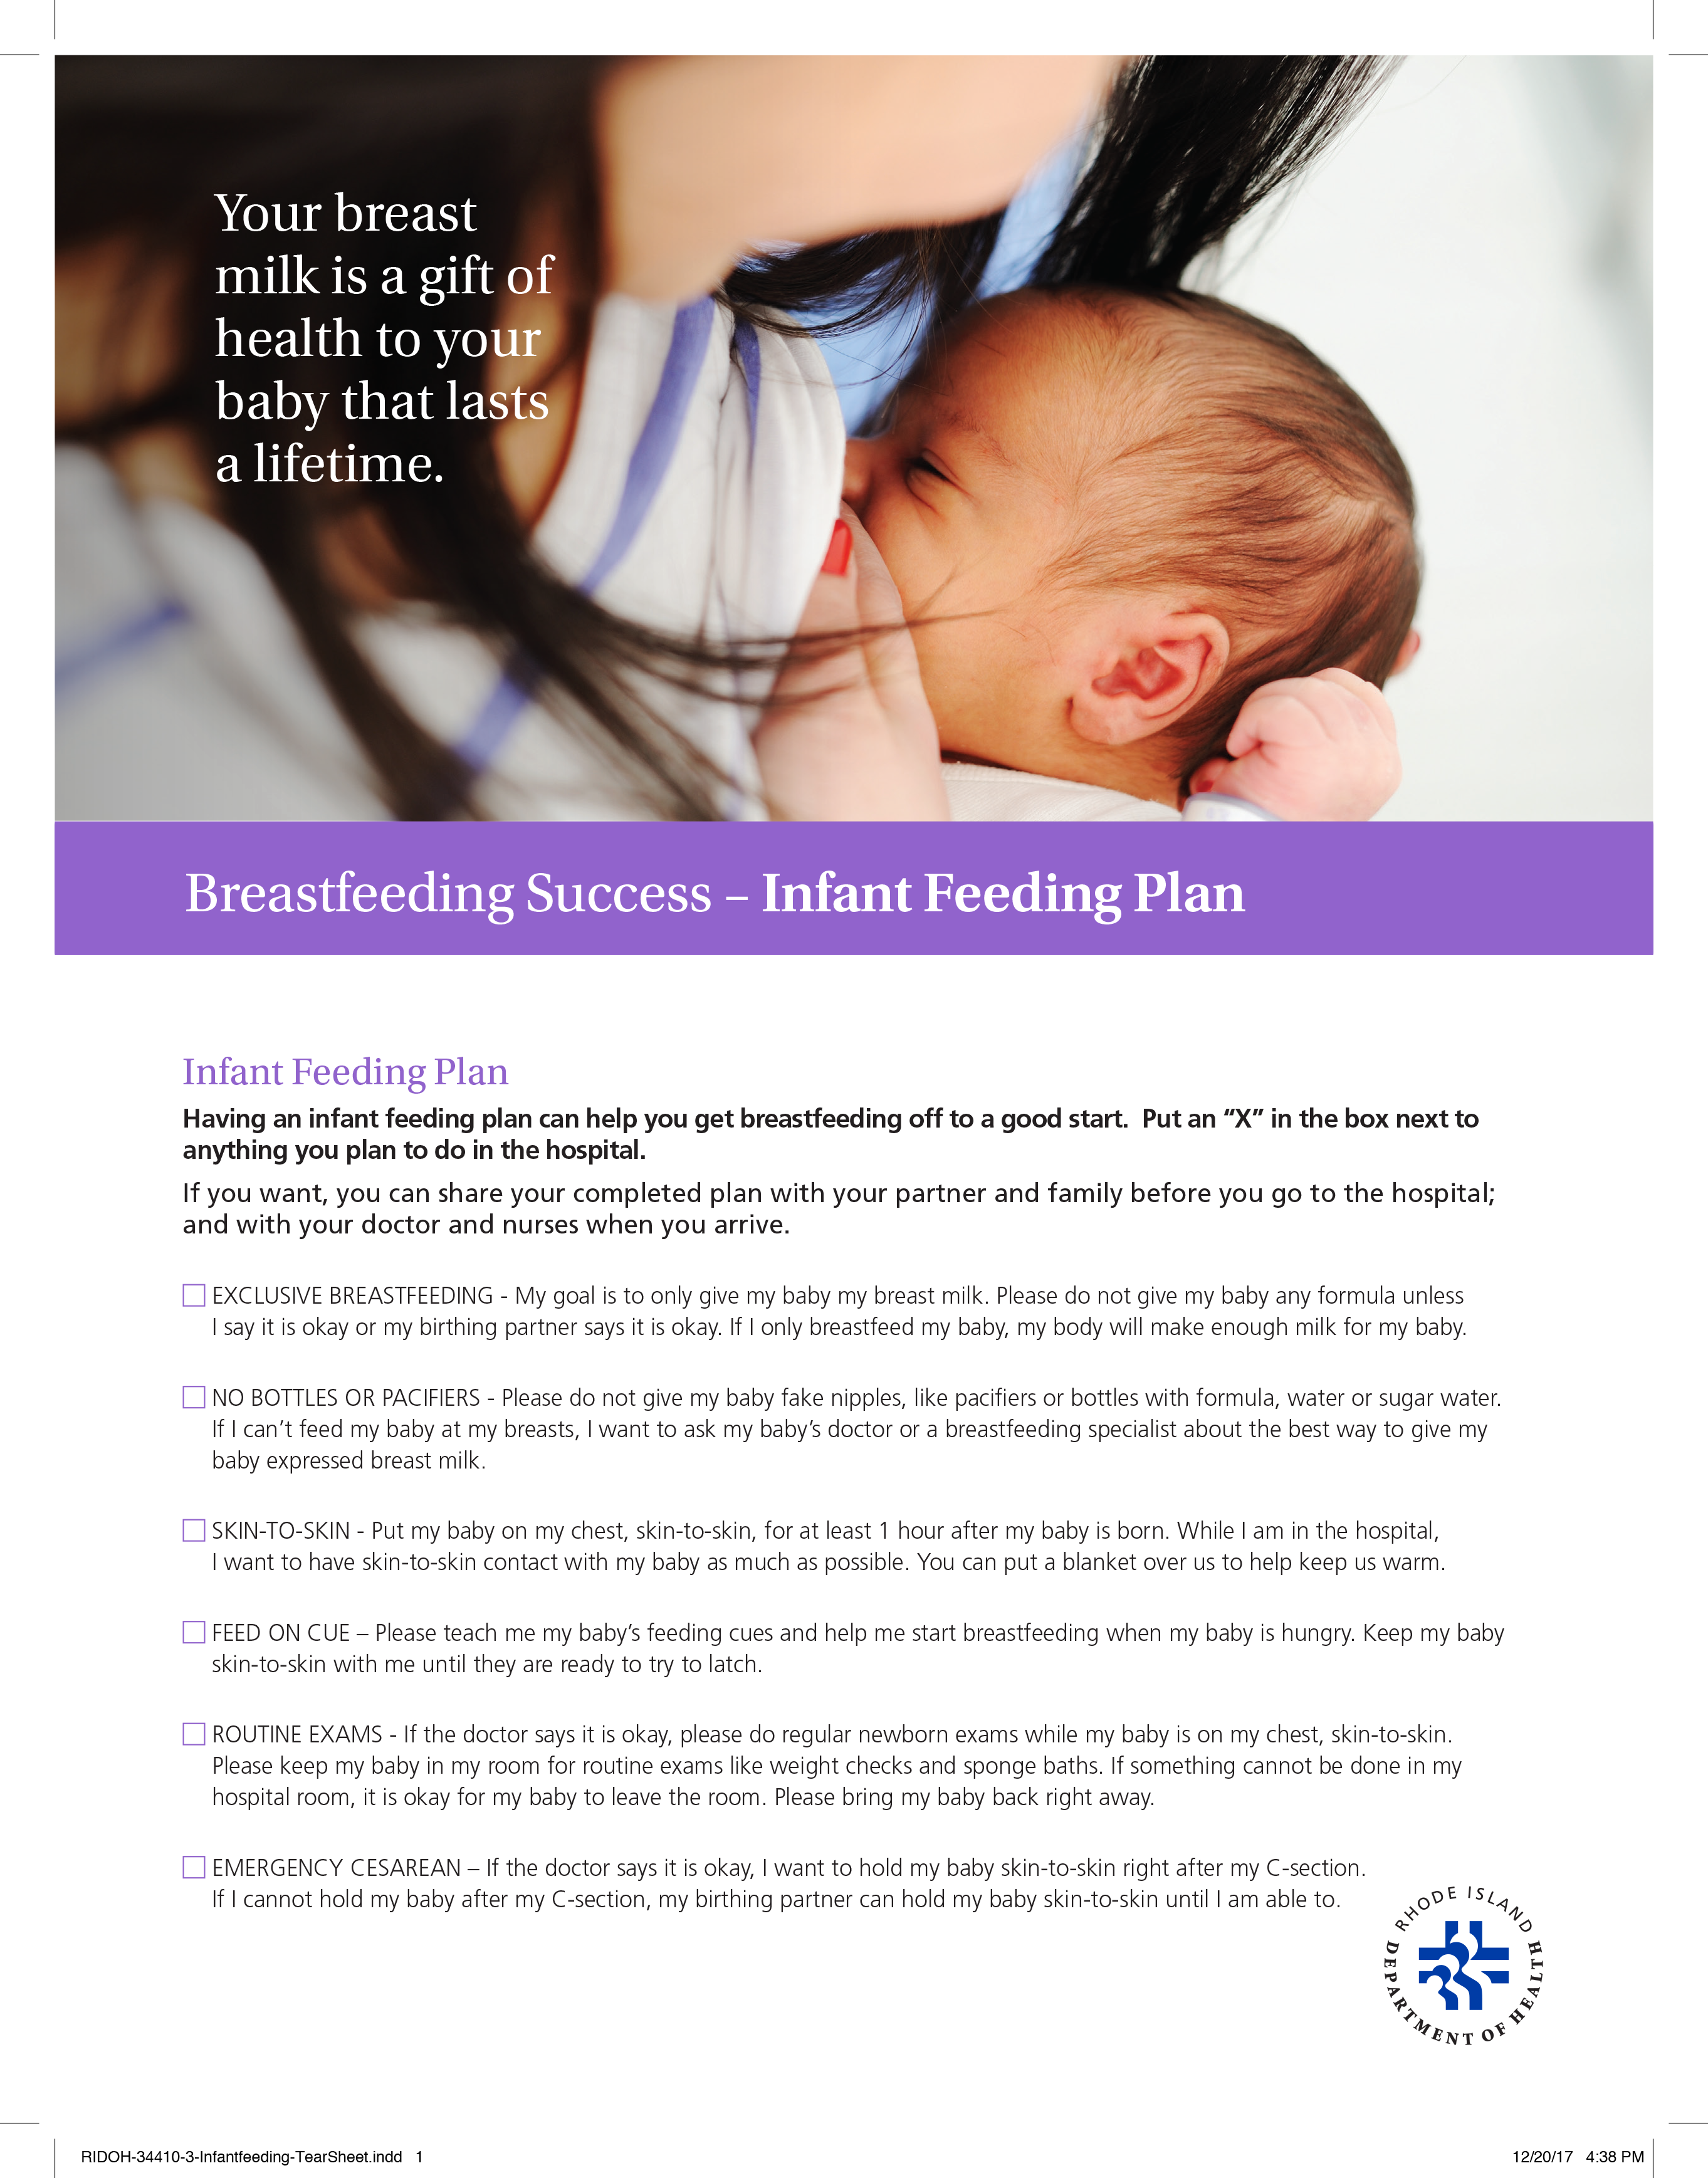 Breastfeeding Success: Infant feeding plan, tearpad